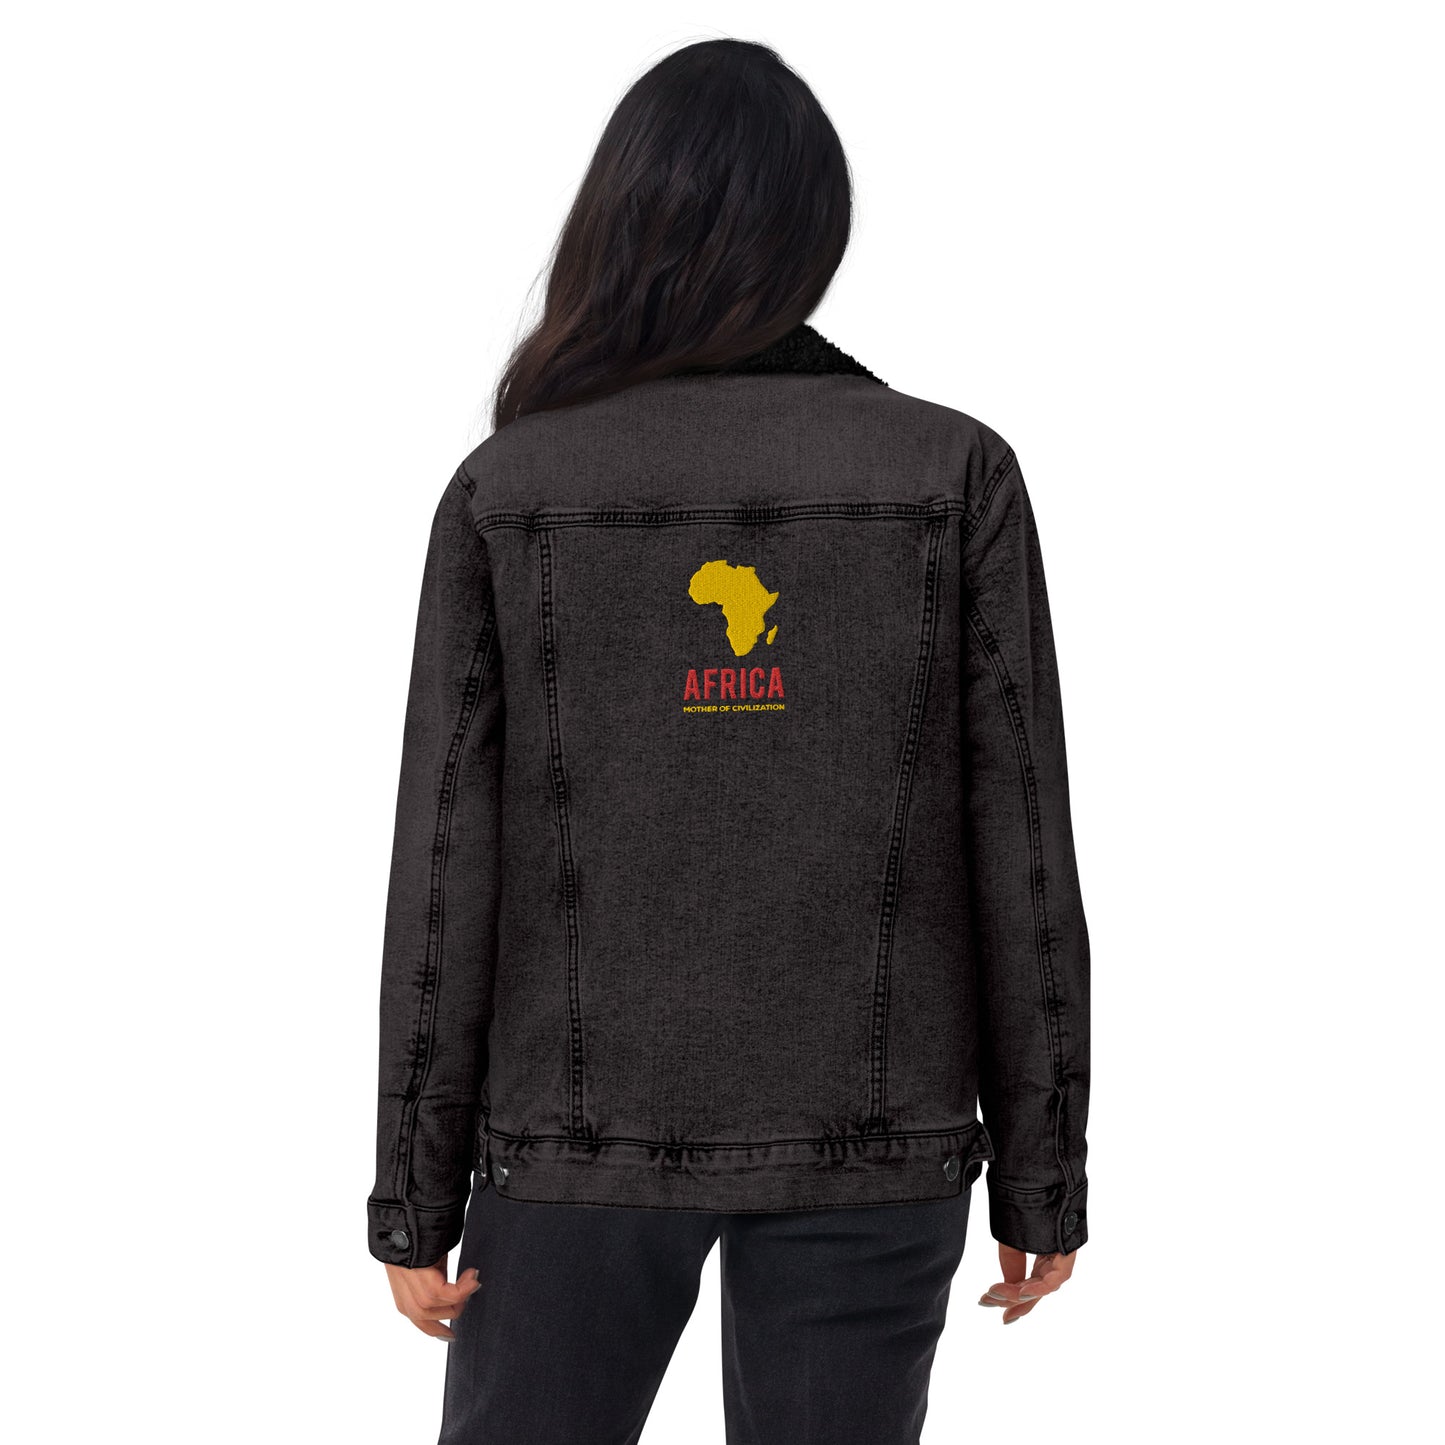 AFRICA - MOTHER OF CIVILIZATION Unisex Denim Sherpa Jacket